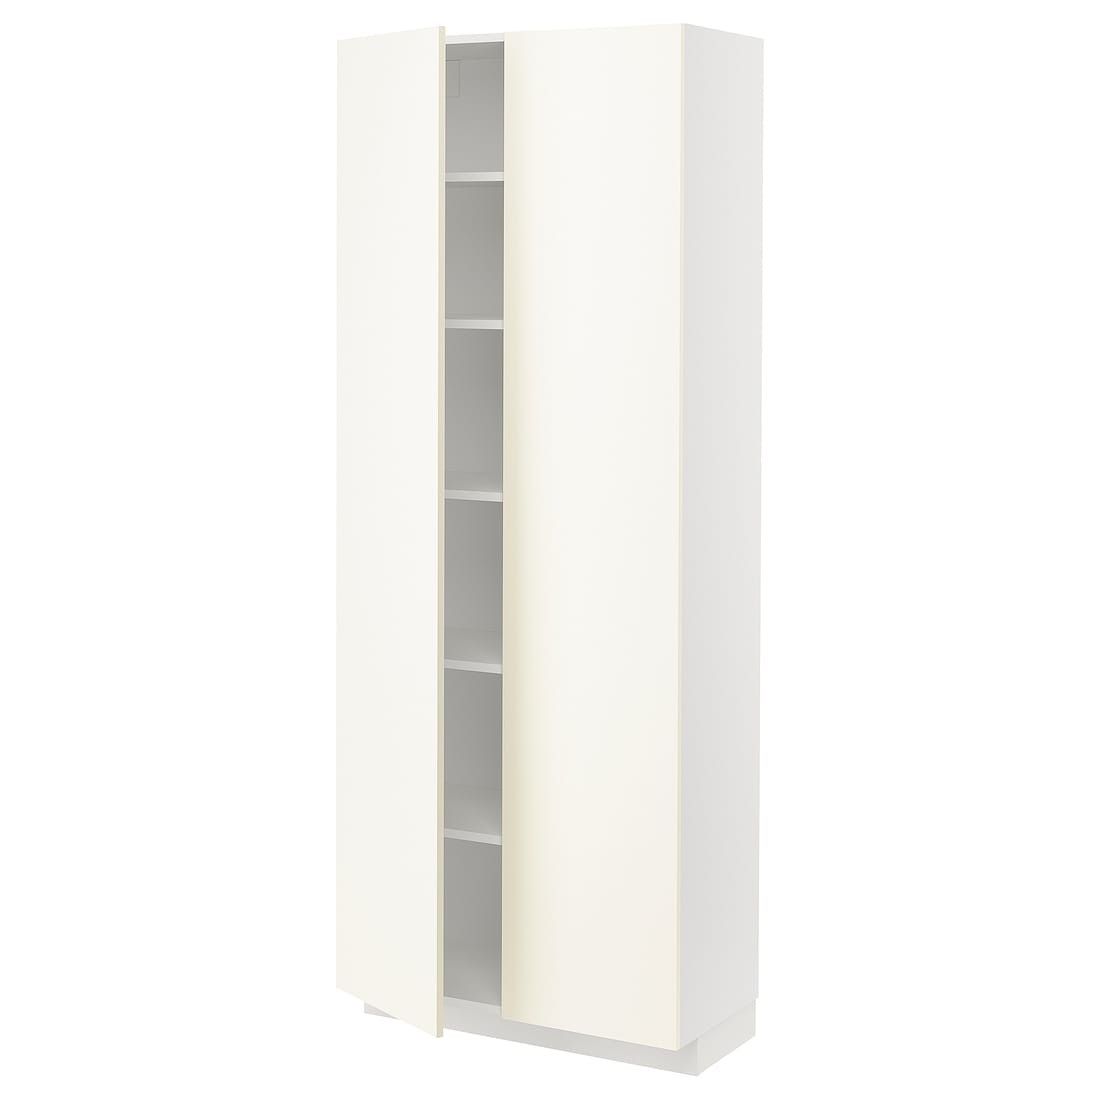 IKEA METOD МЕТОД Высокий шкаф с полками, белый / Vallstena белый 49507314 | 495.073.14